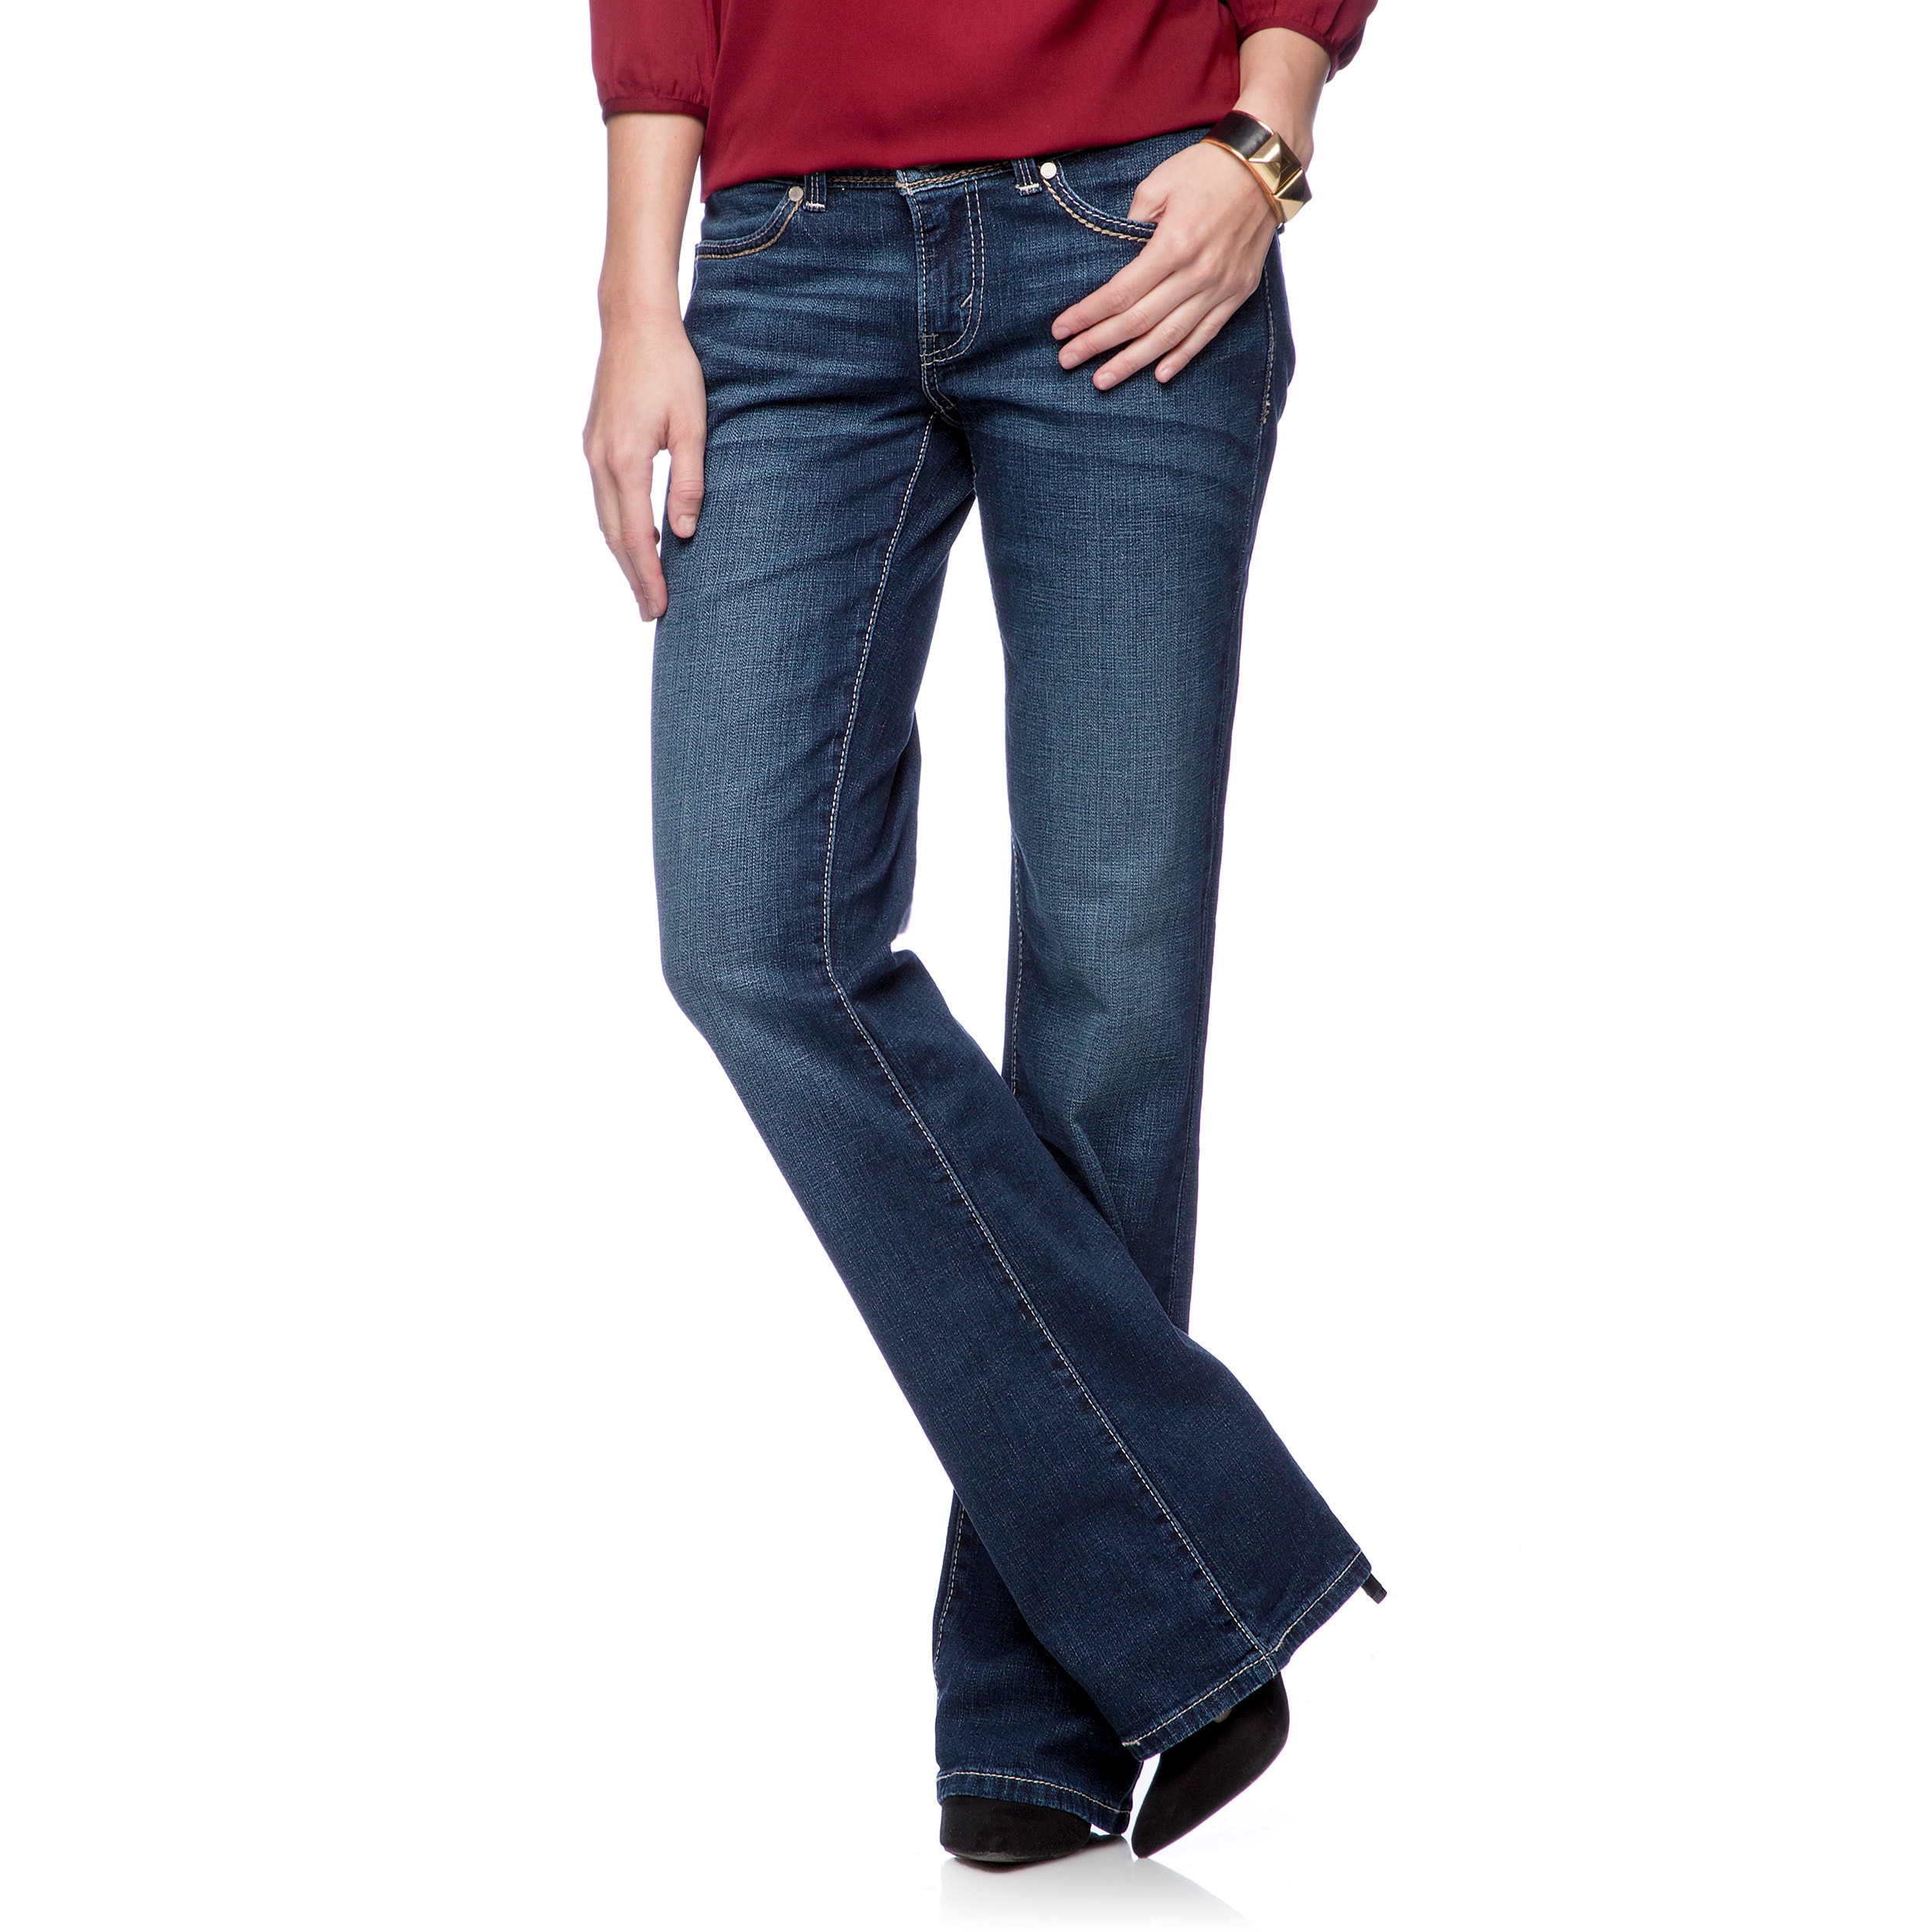 levi's 529 bootcut jeans